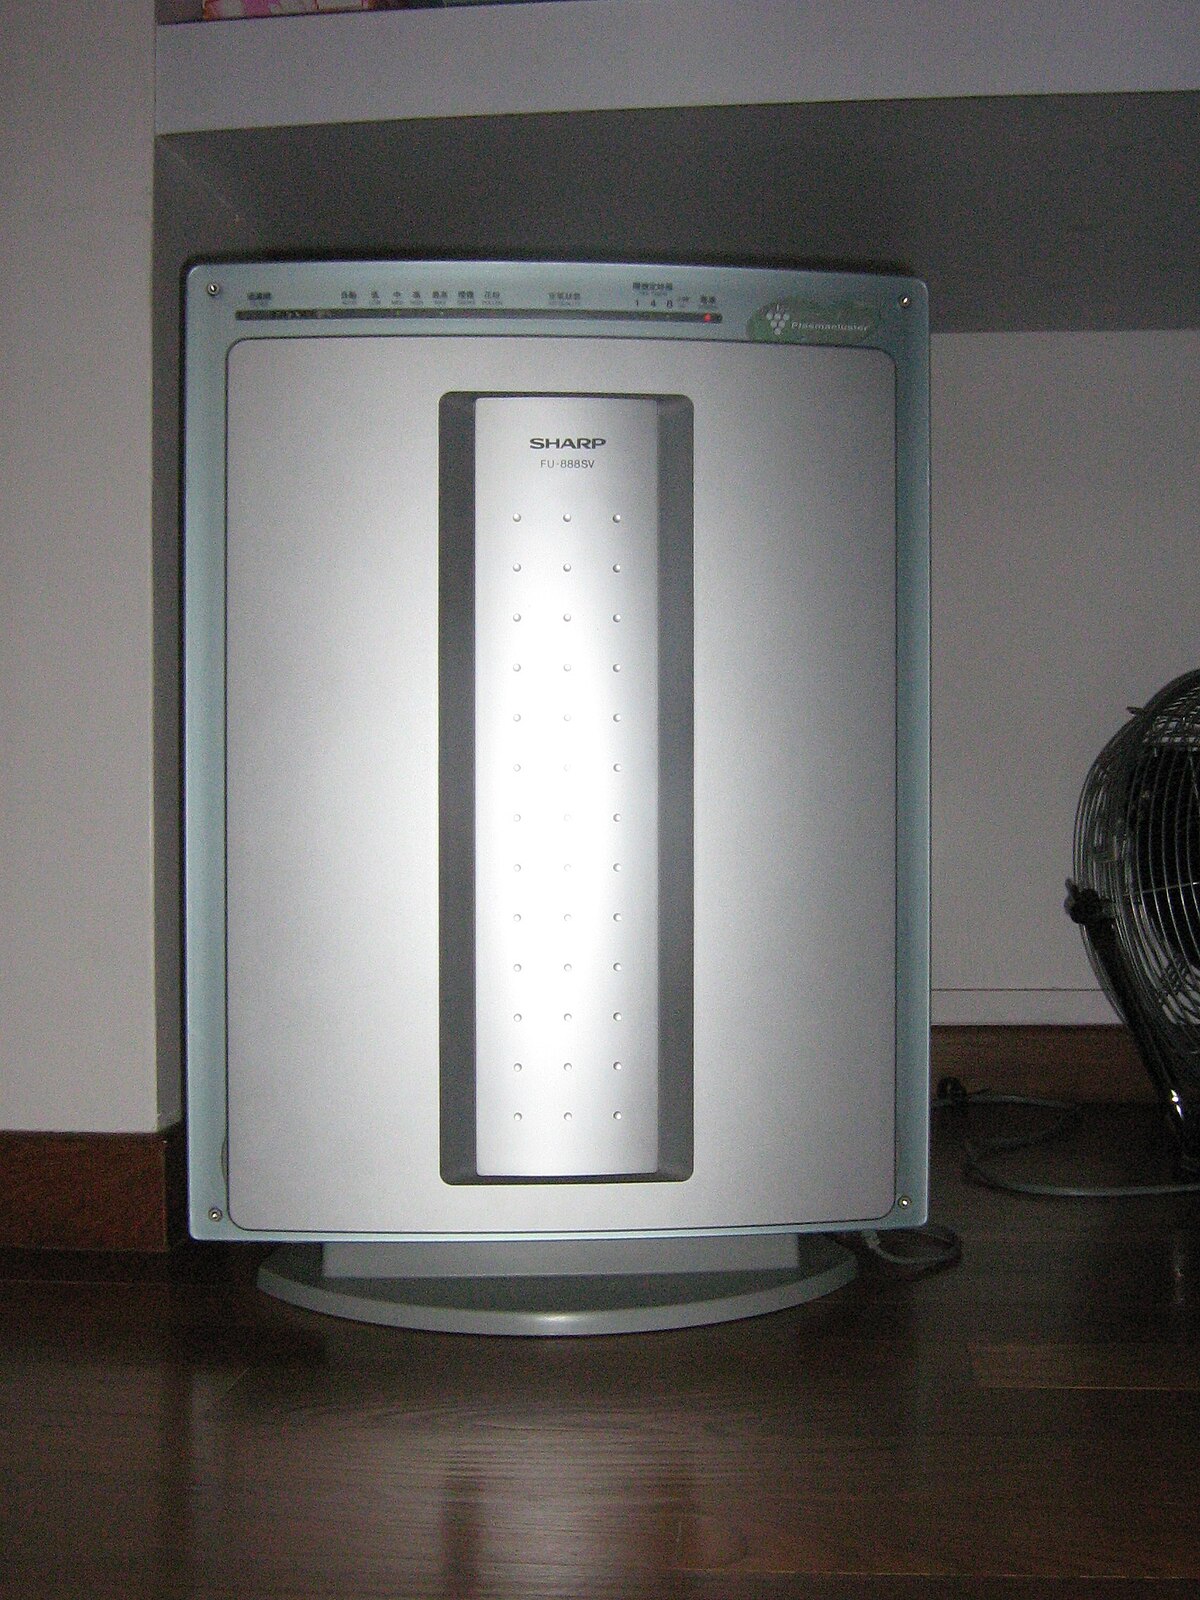 Air purifier - Wikipedia